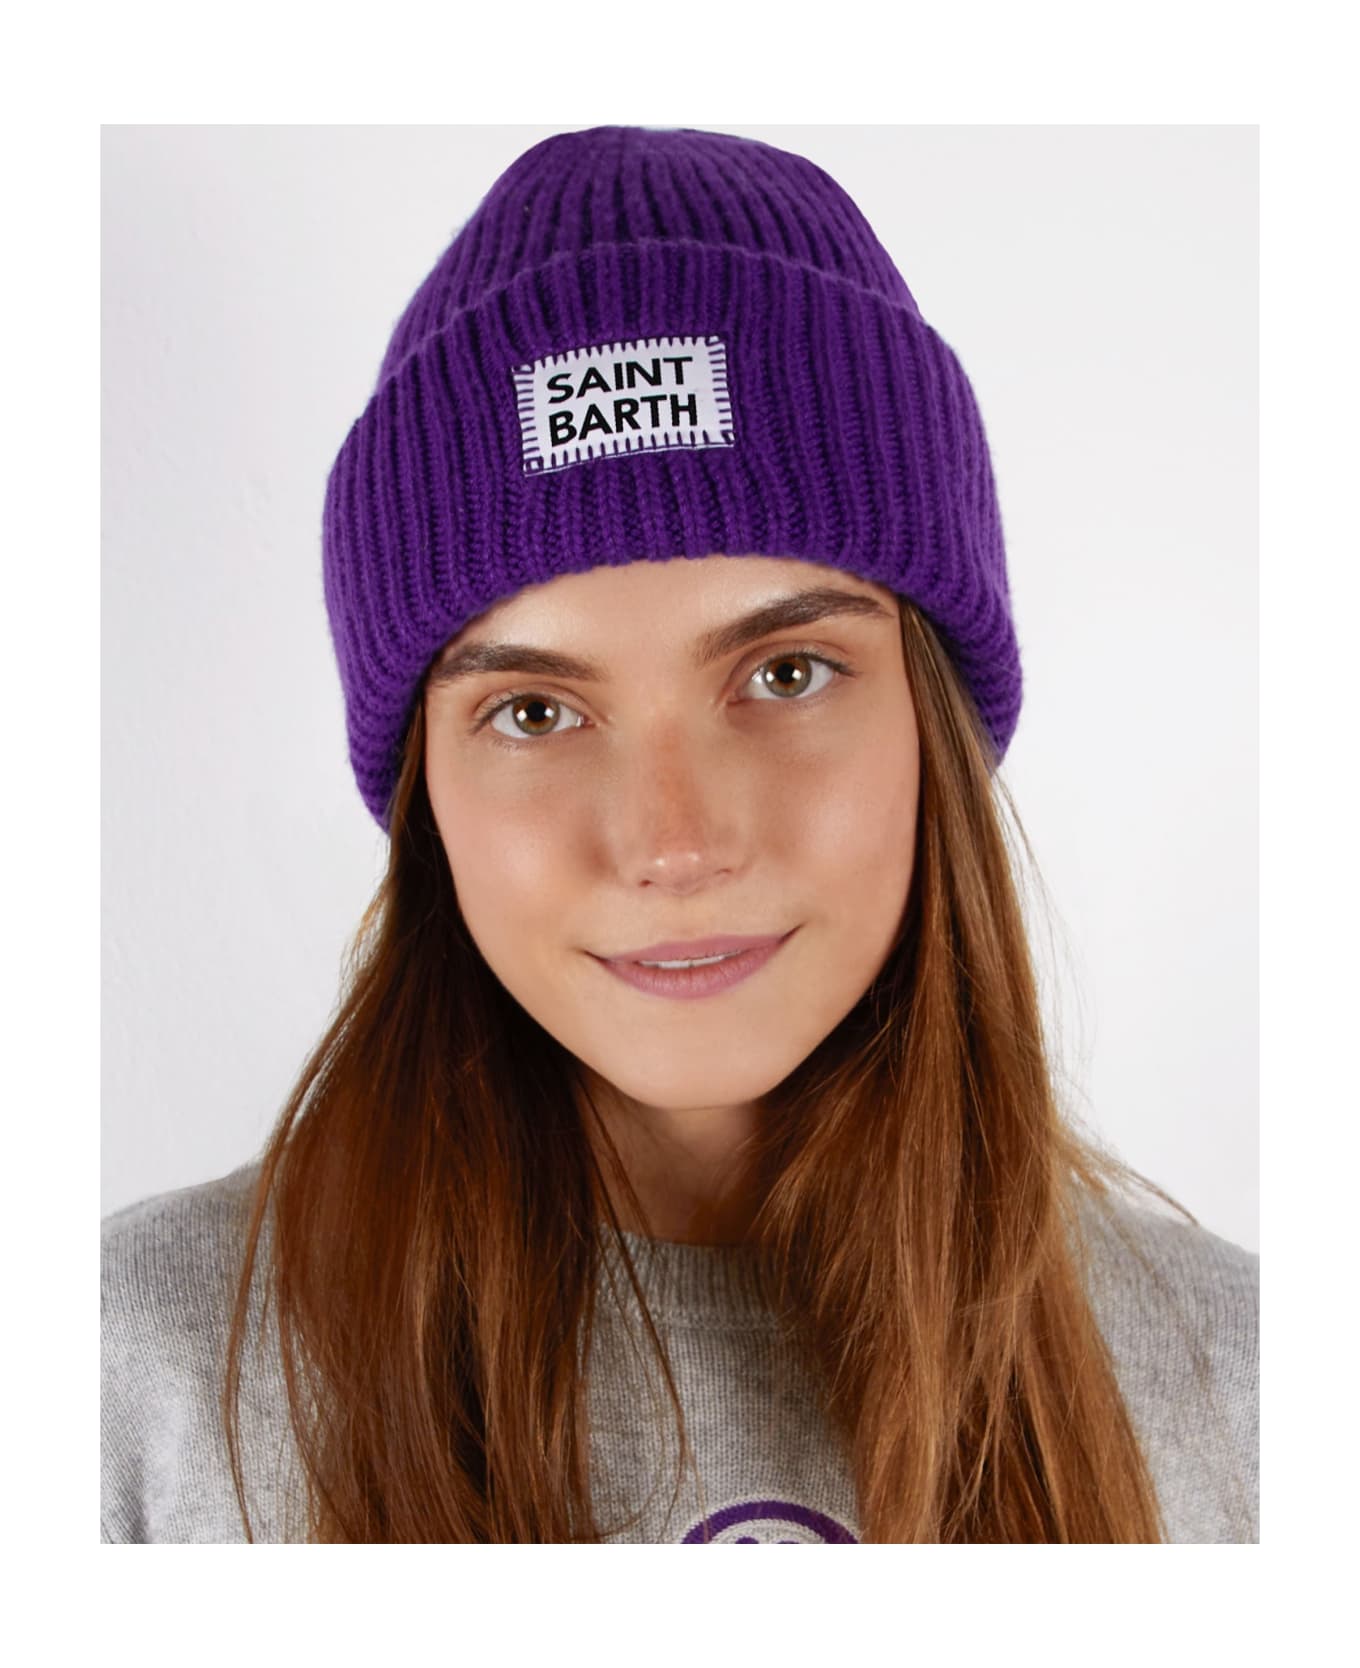 MC2 Saint Barth Woman Purple Knit Beanie - PINK